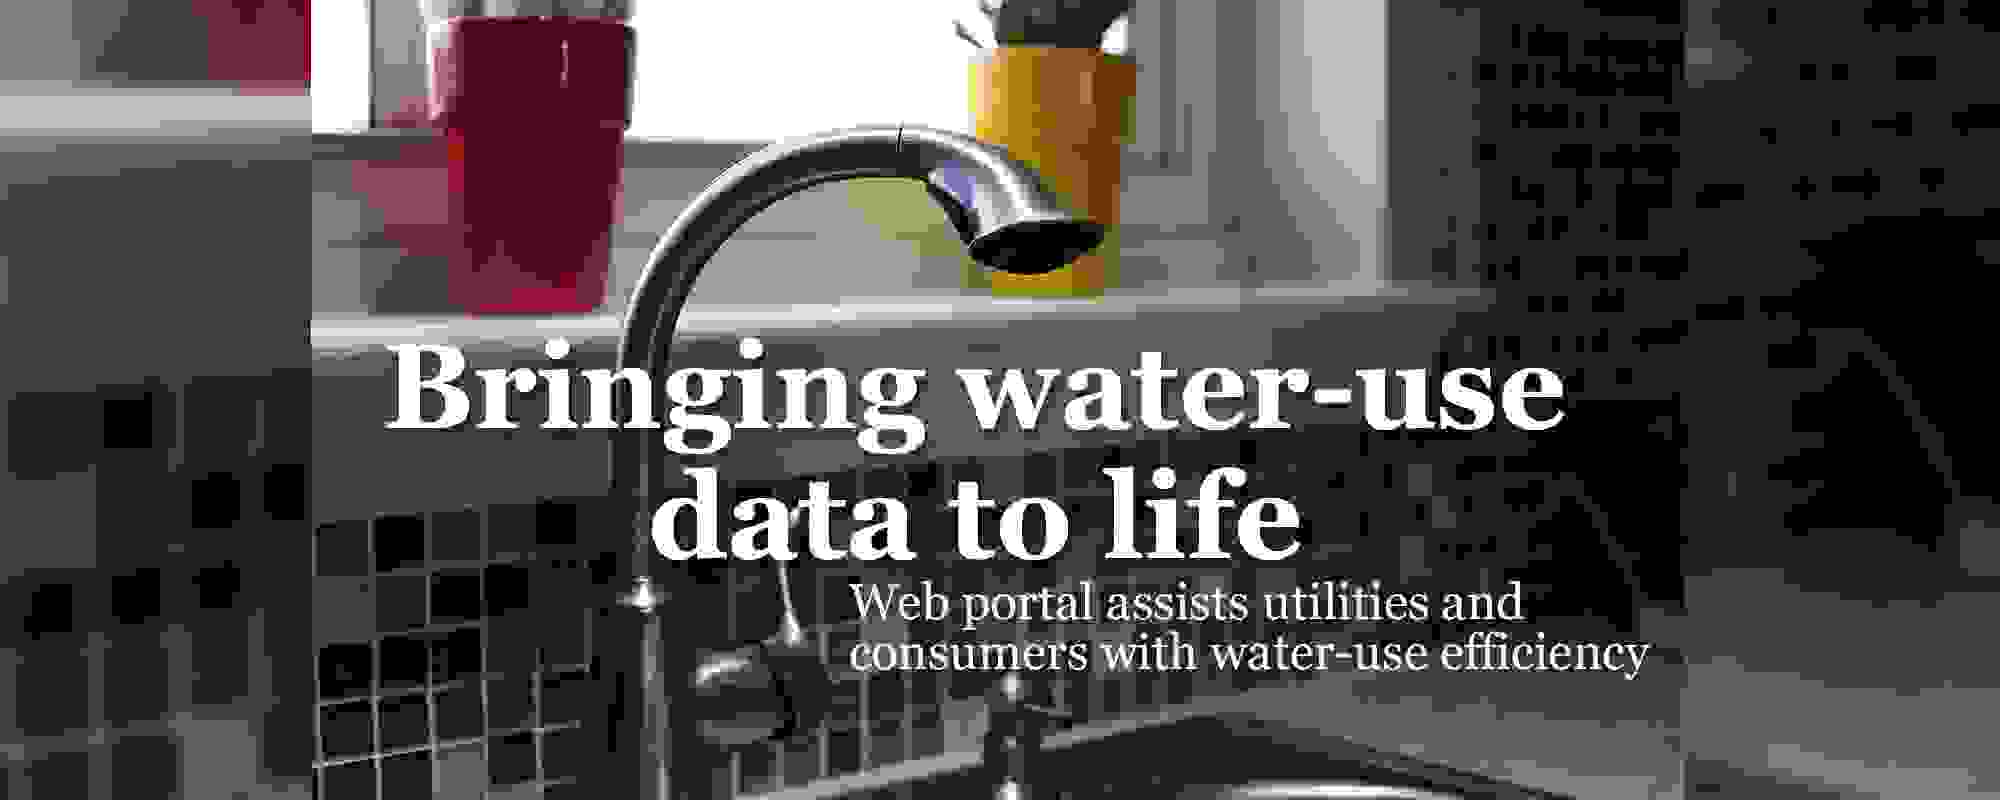 Bringing water-use data to life